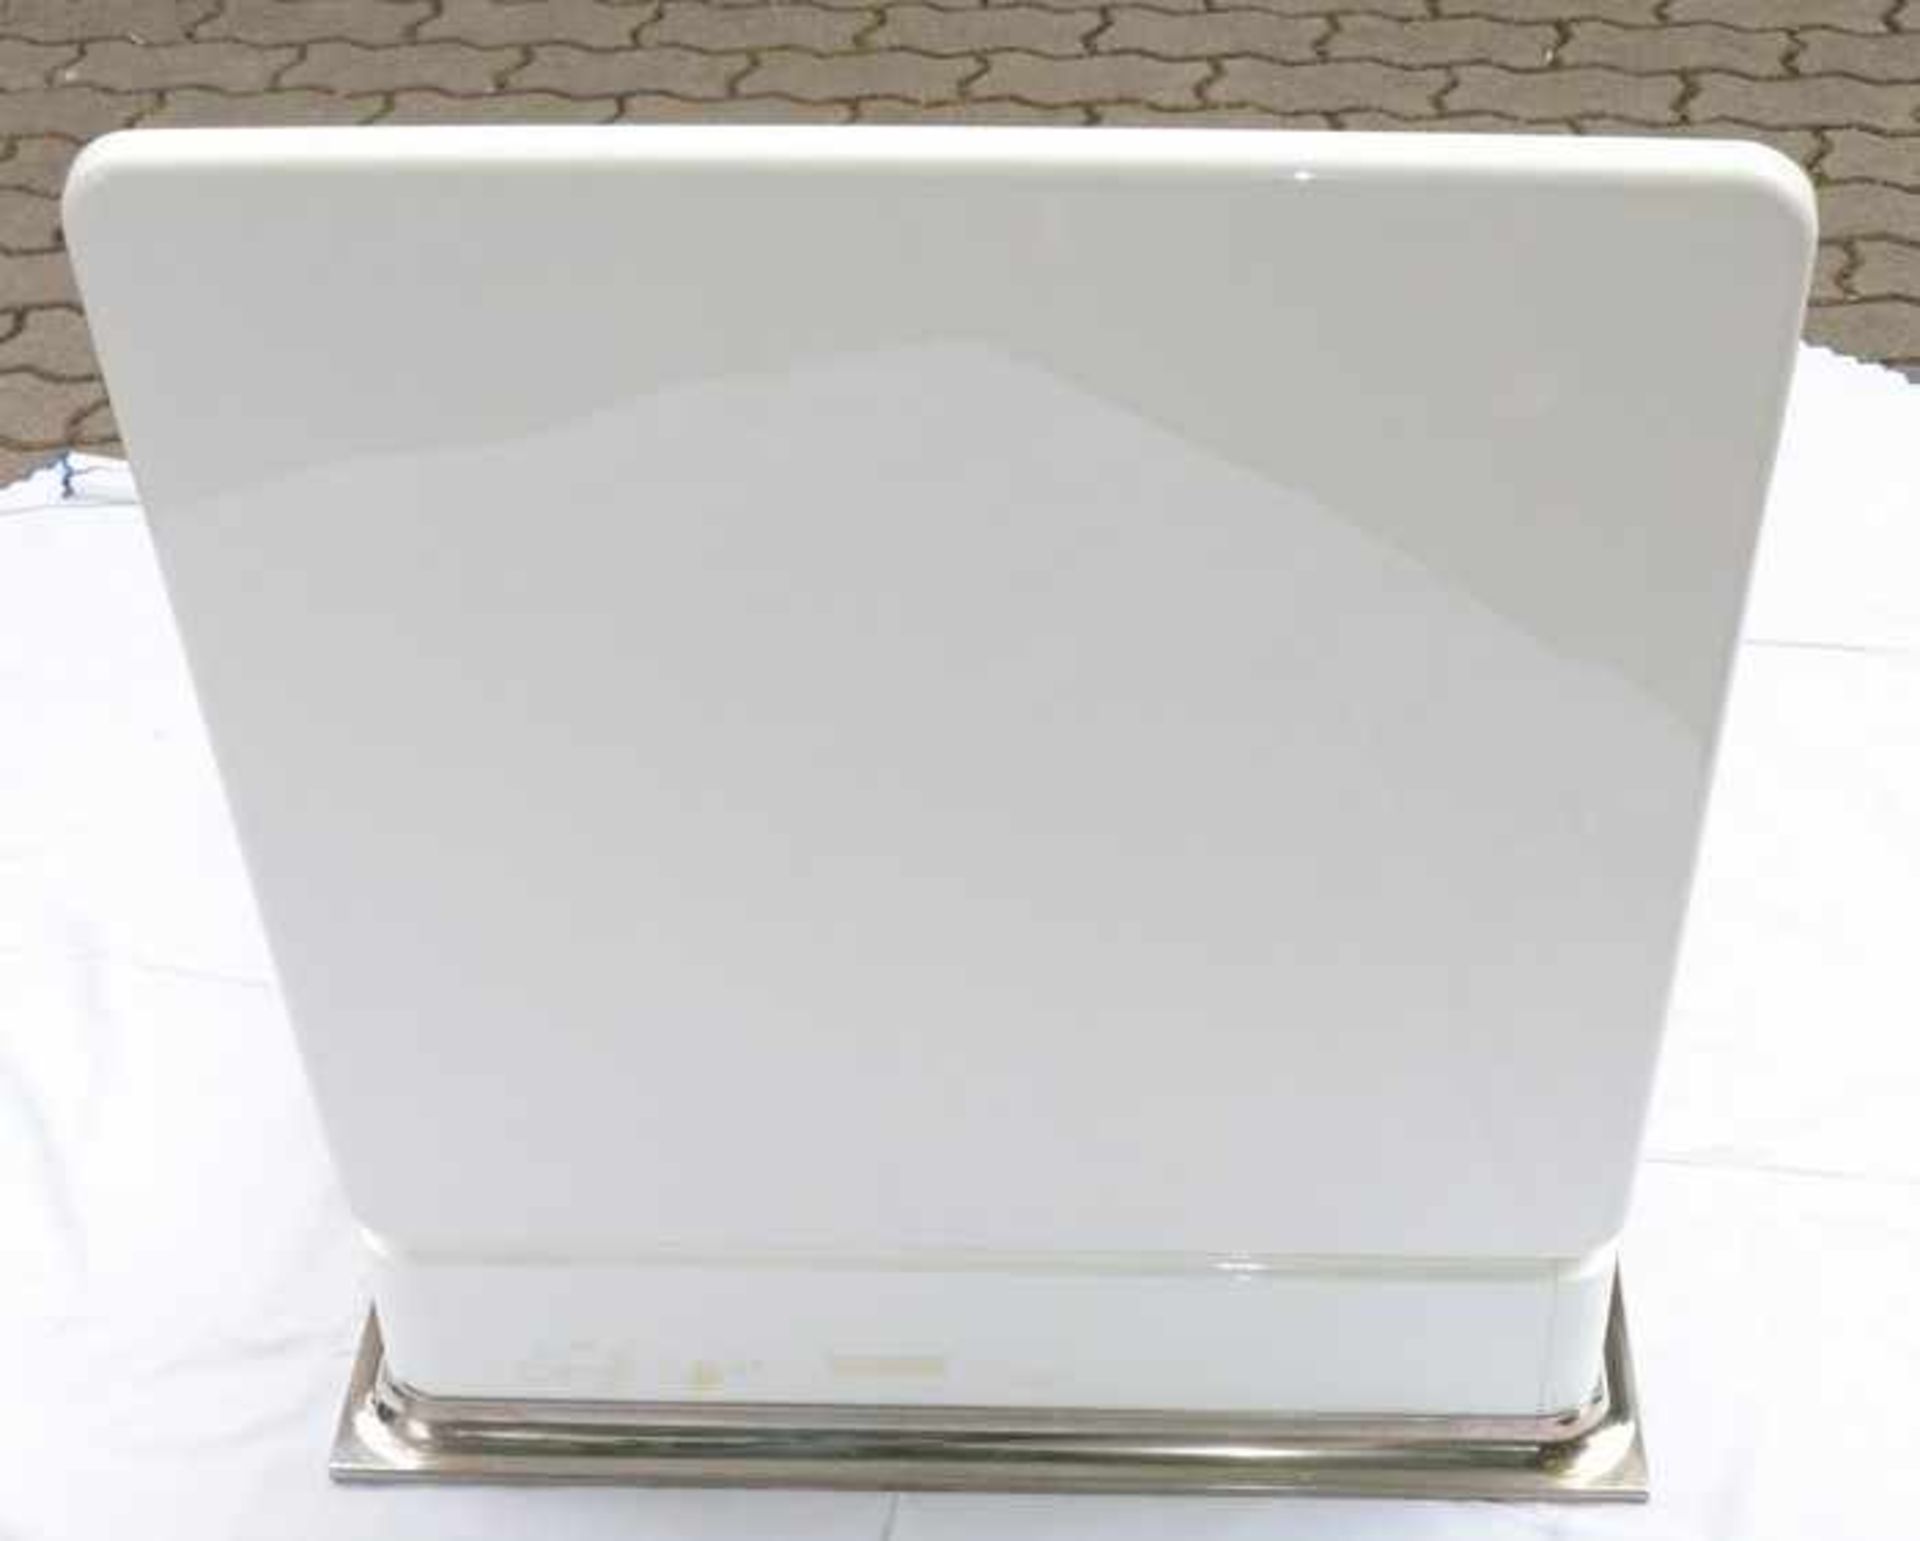 Wandschrank - BadezimmerKunststoff/Metall, rechteckiger Korpus, abgerundete Ecken, Rückseite Metall, - Image 4 of 5